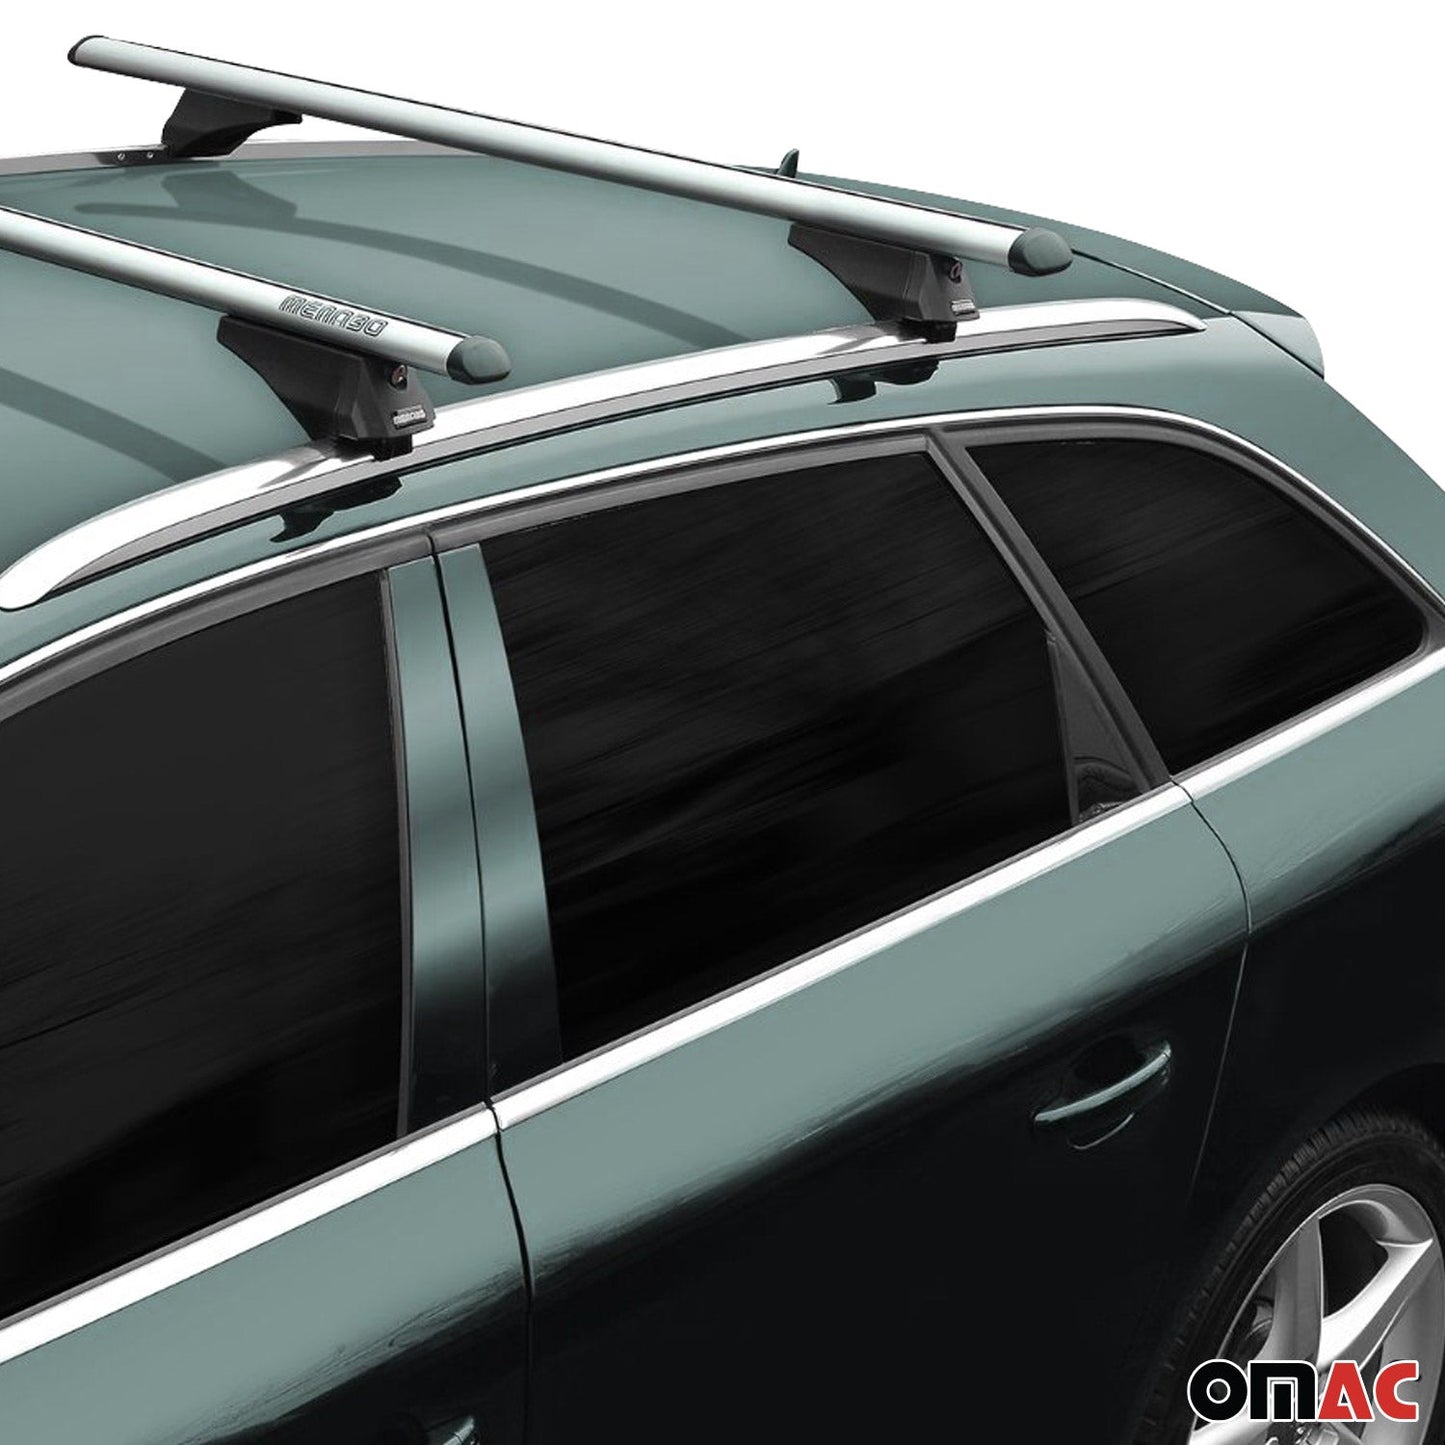 OMAC Top Roof Racks Cross Bars for Audi Q5 2009-2012 Alu Carrier Gray 2Pcs U027329